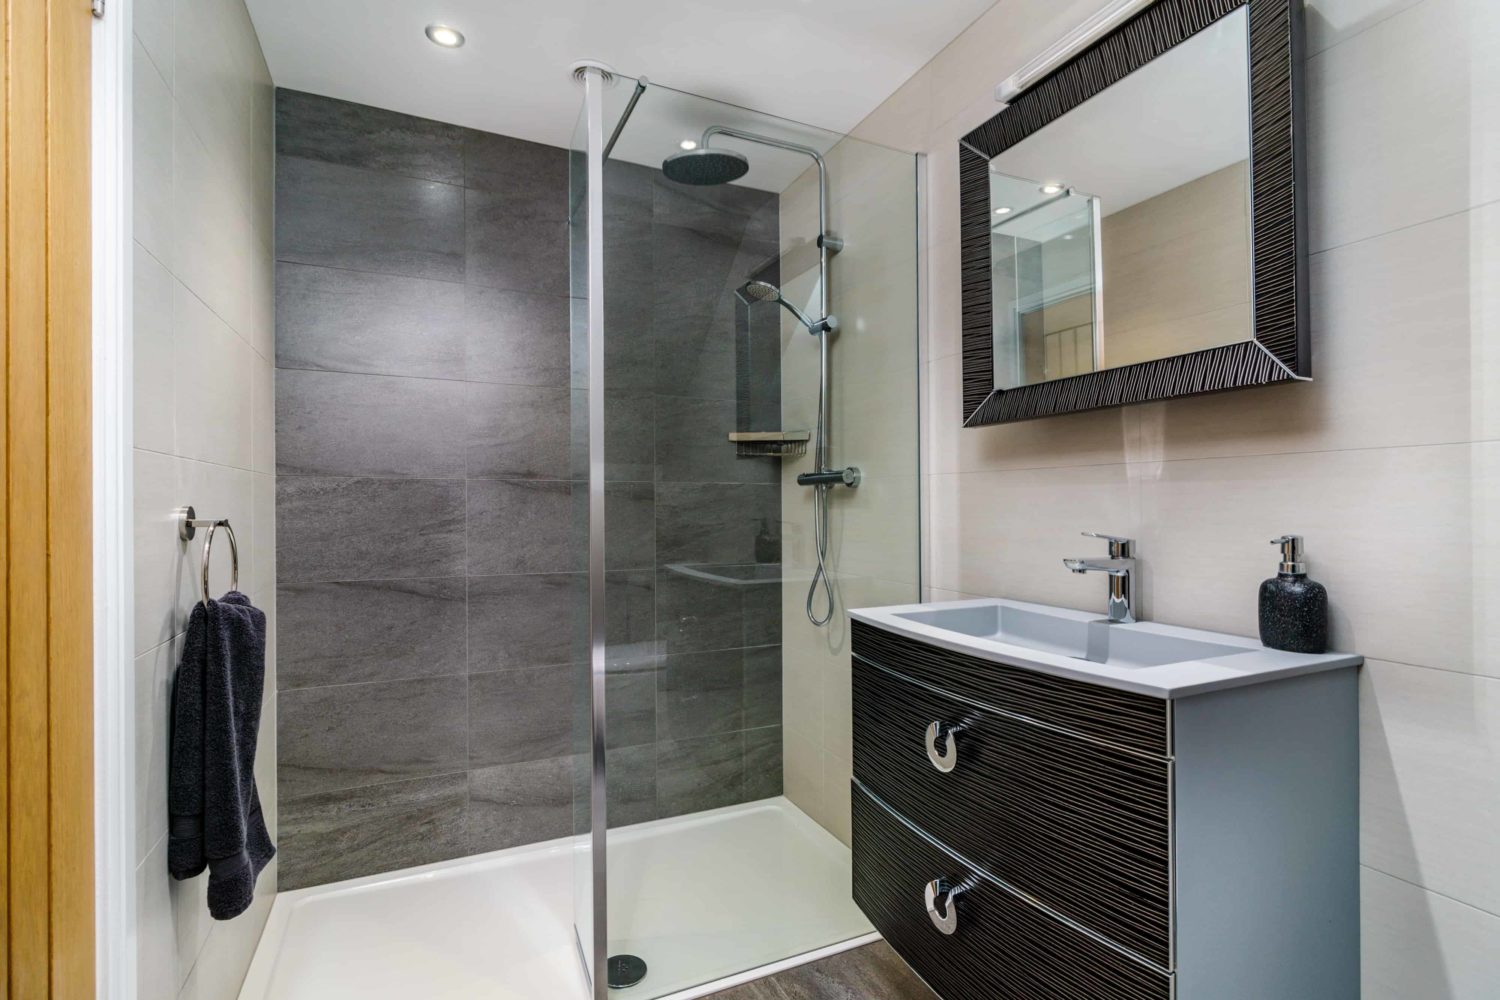 En suite bathroom with grey tiles